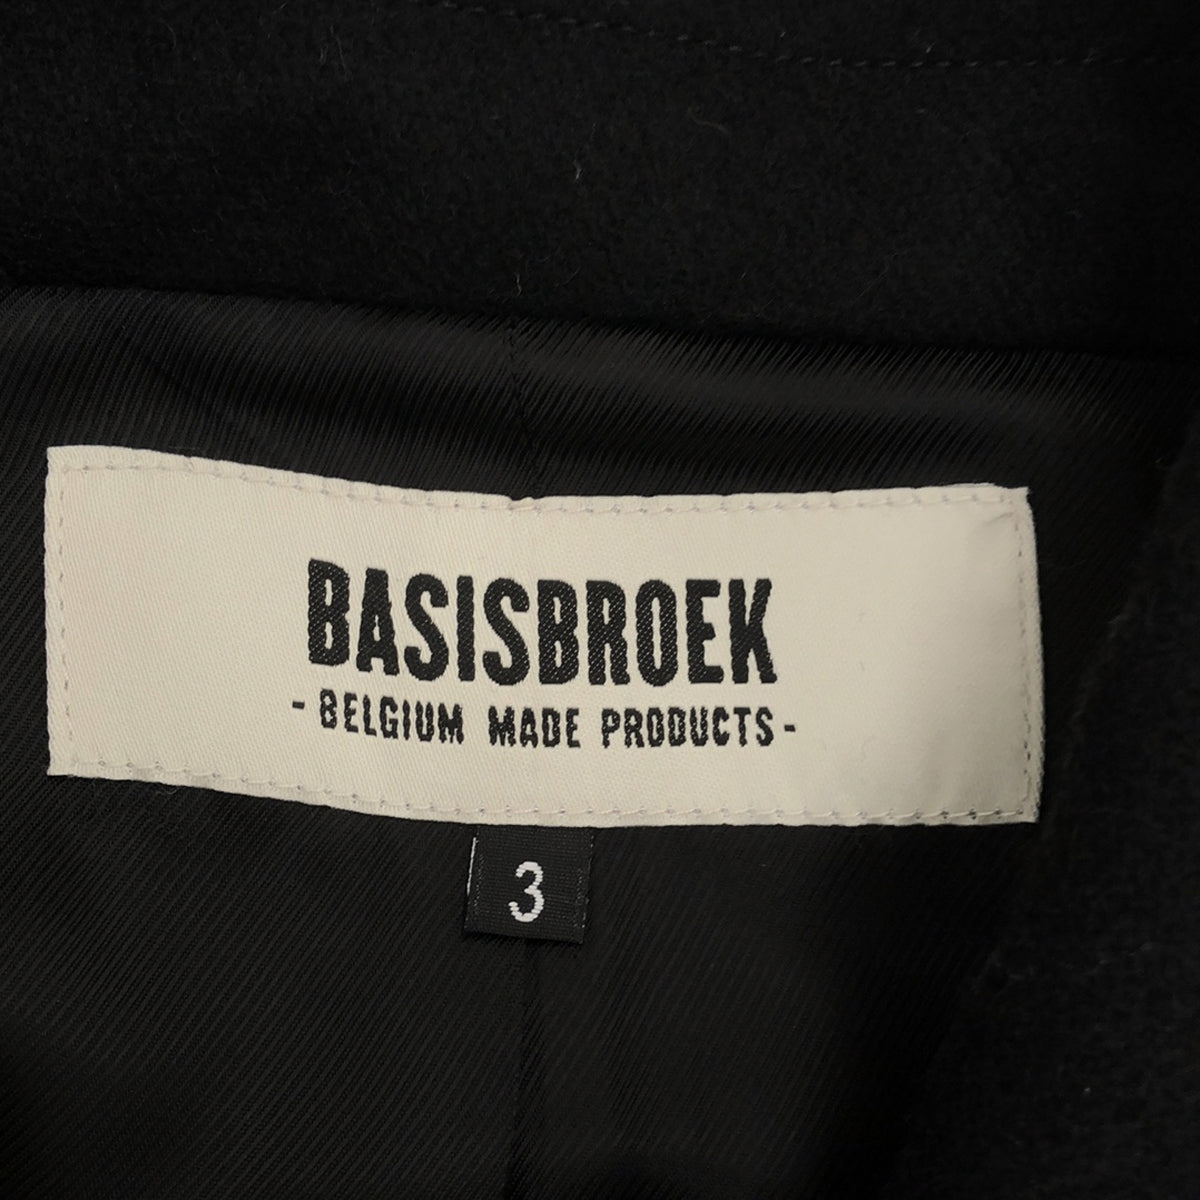 Basisbroek / バージスブルック | ウール EGG3 オーバーコート / 総裏地 | 3 | メンズ